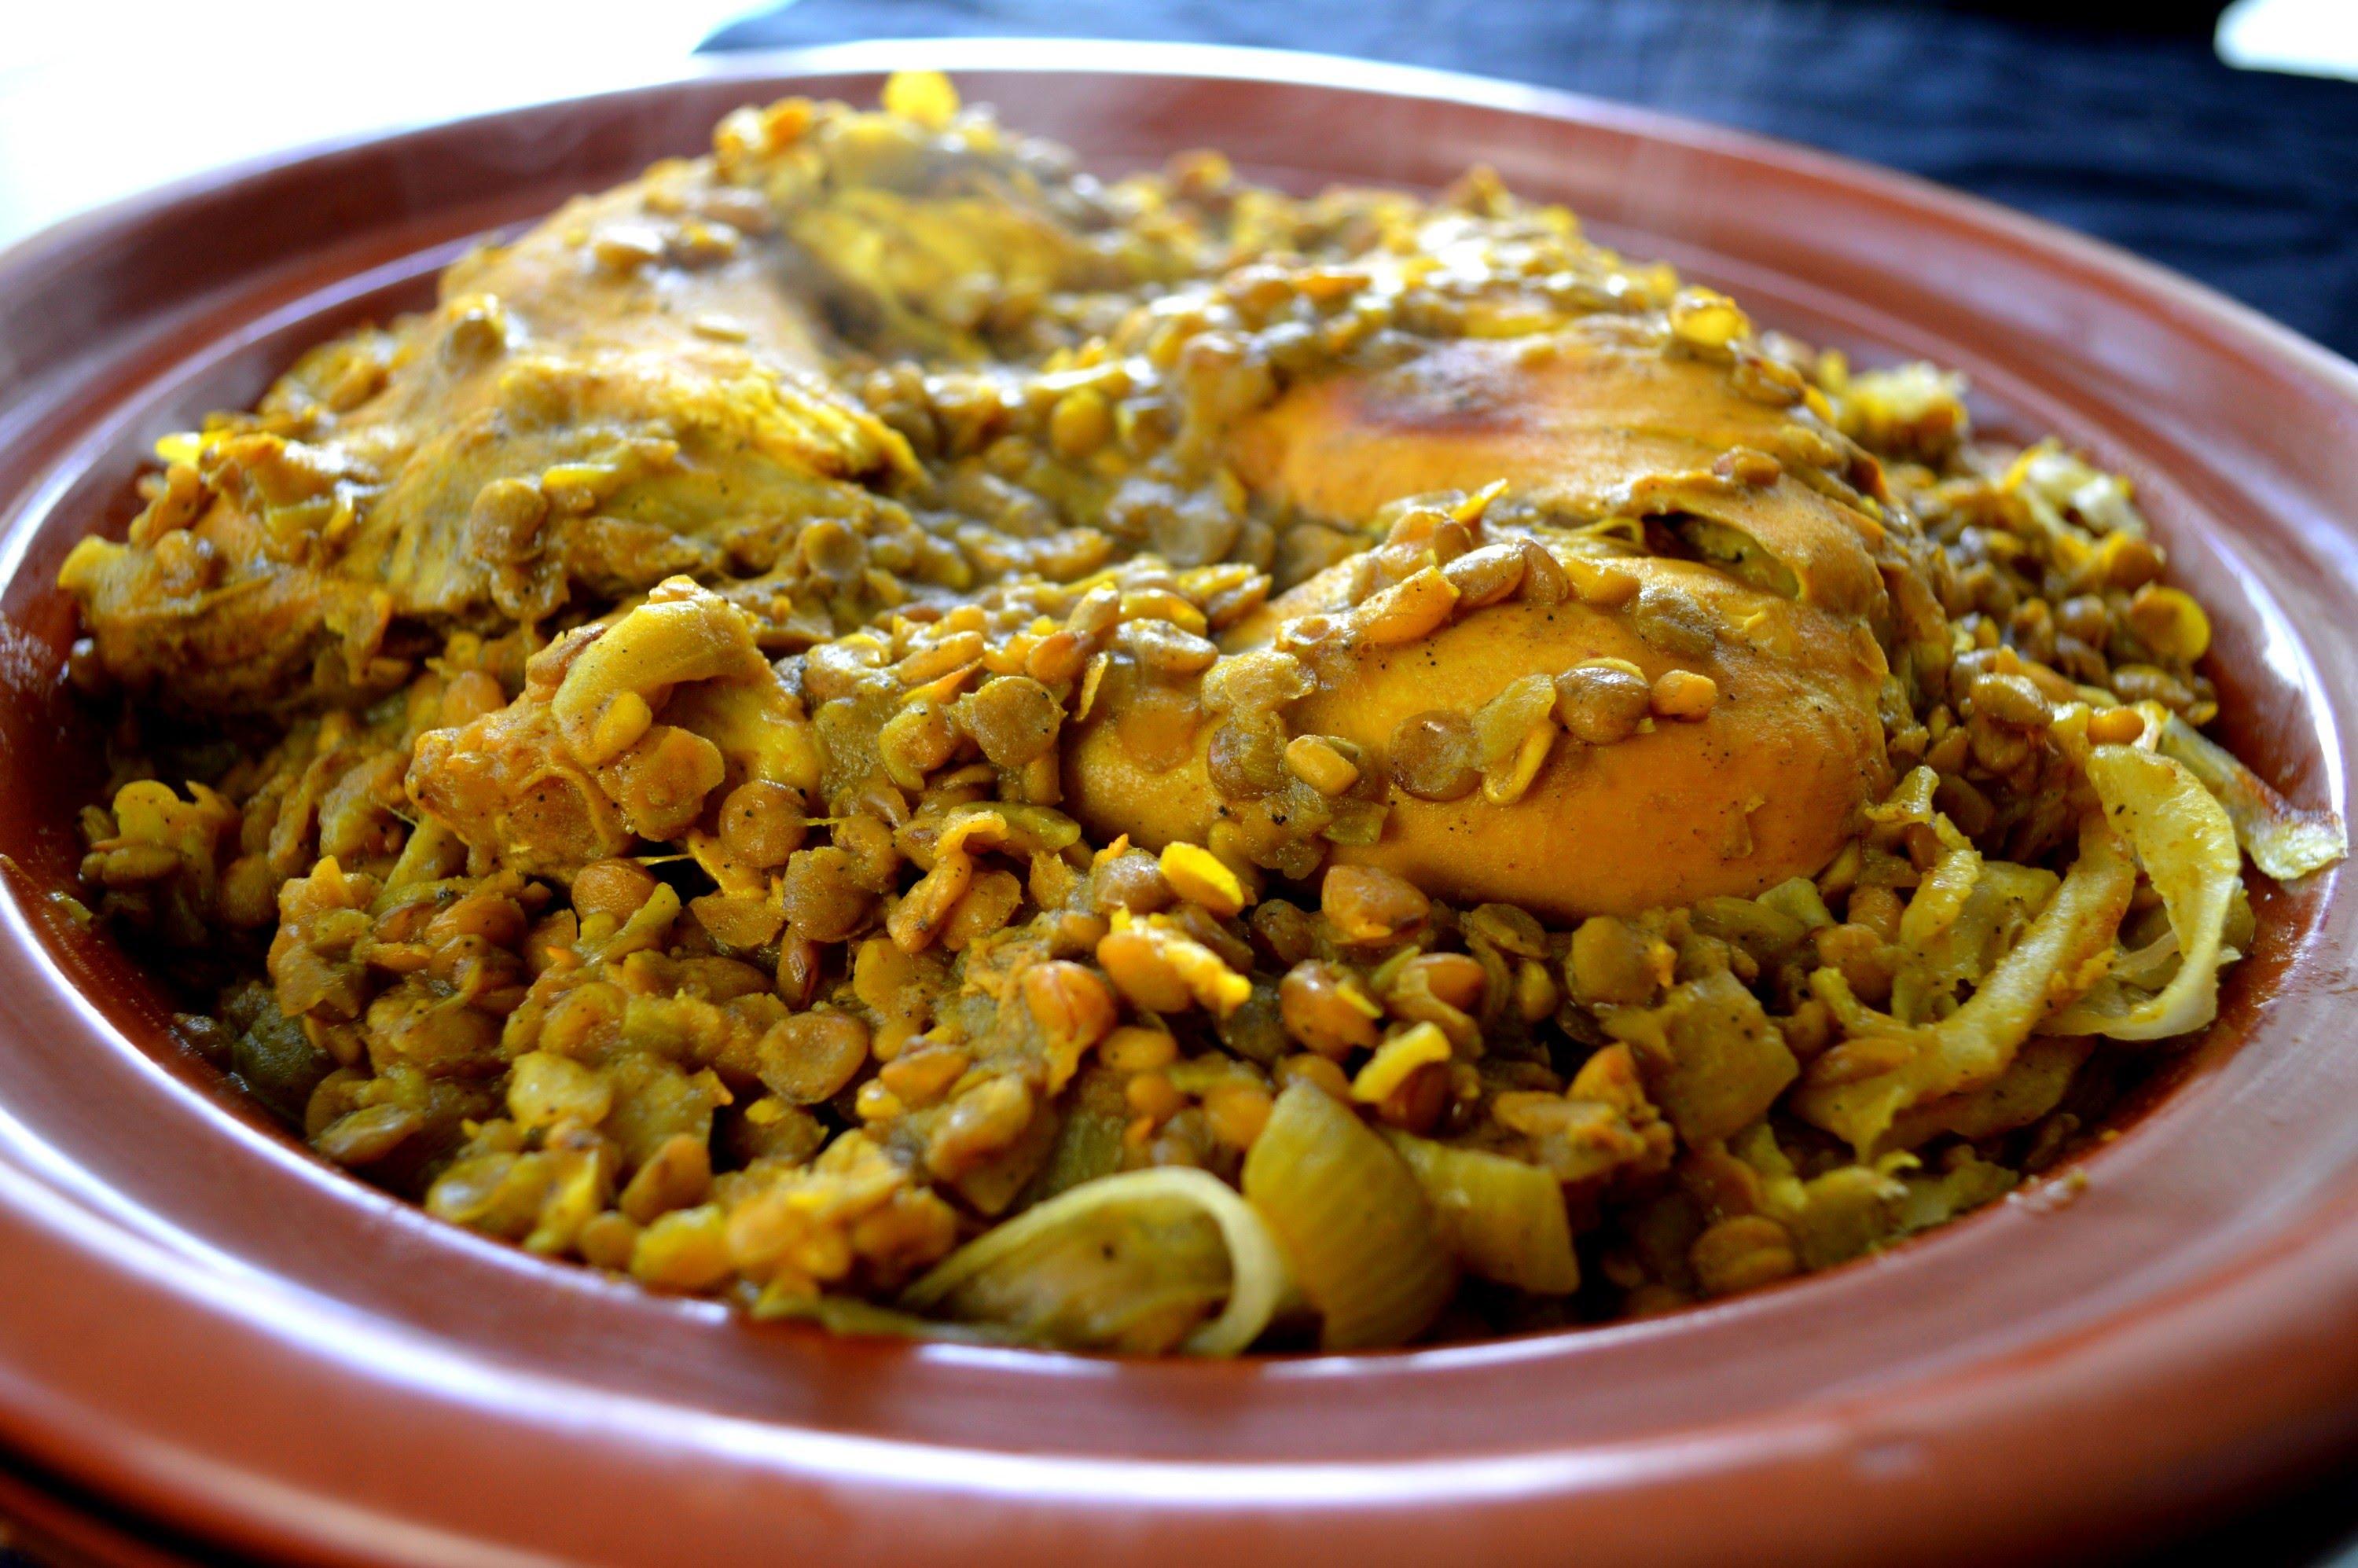 rfissa marocaine